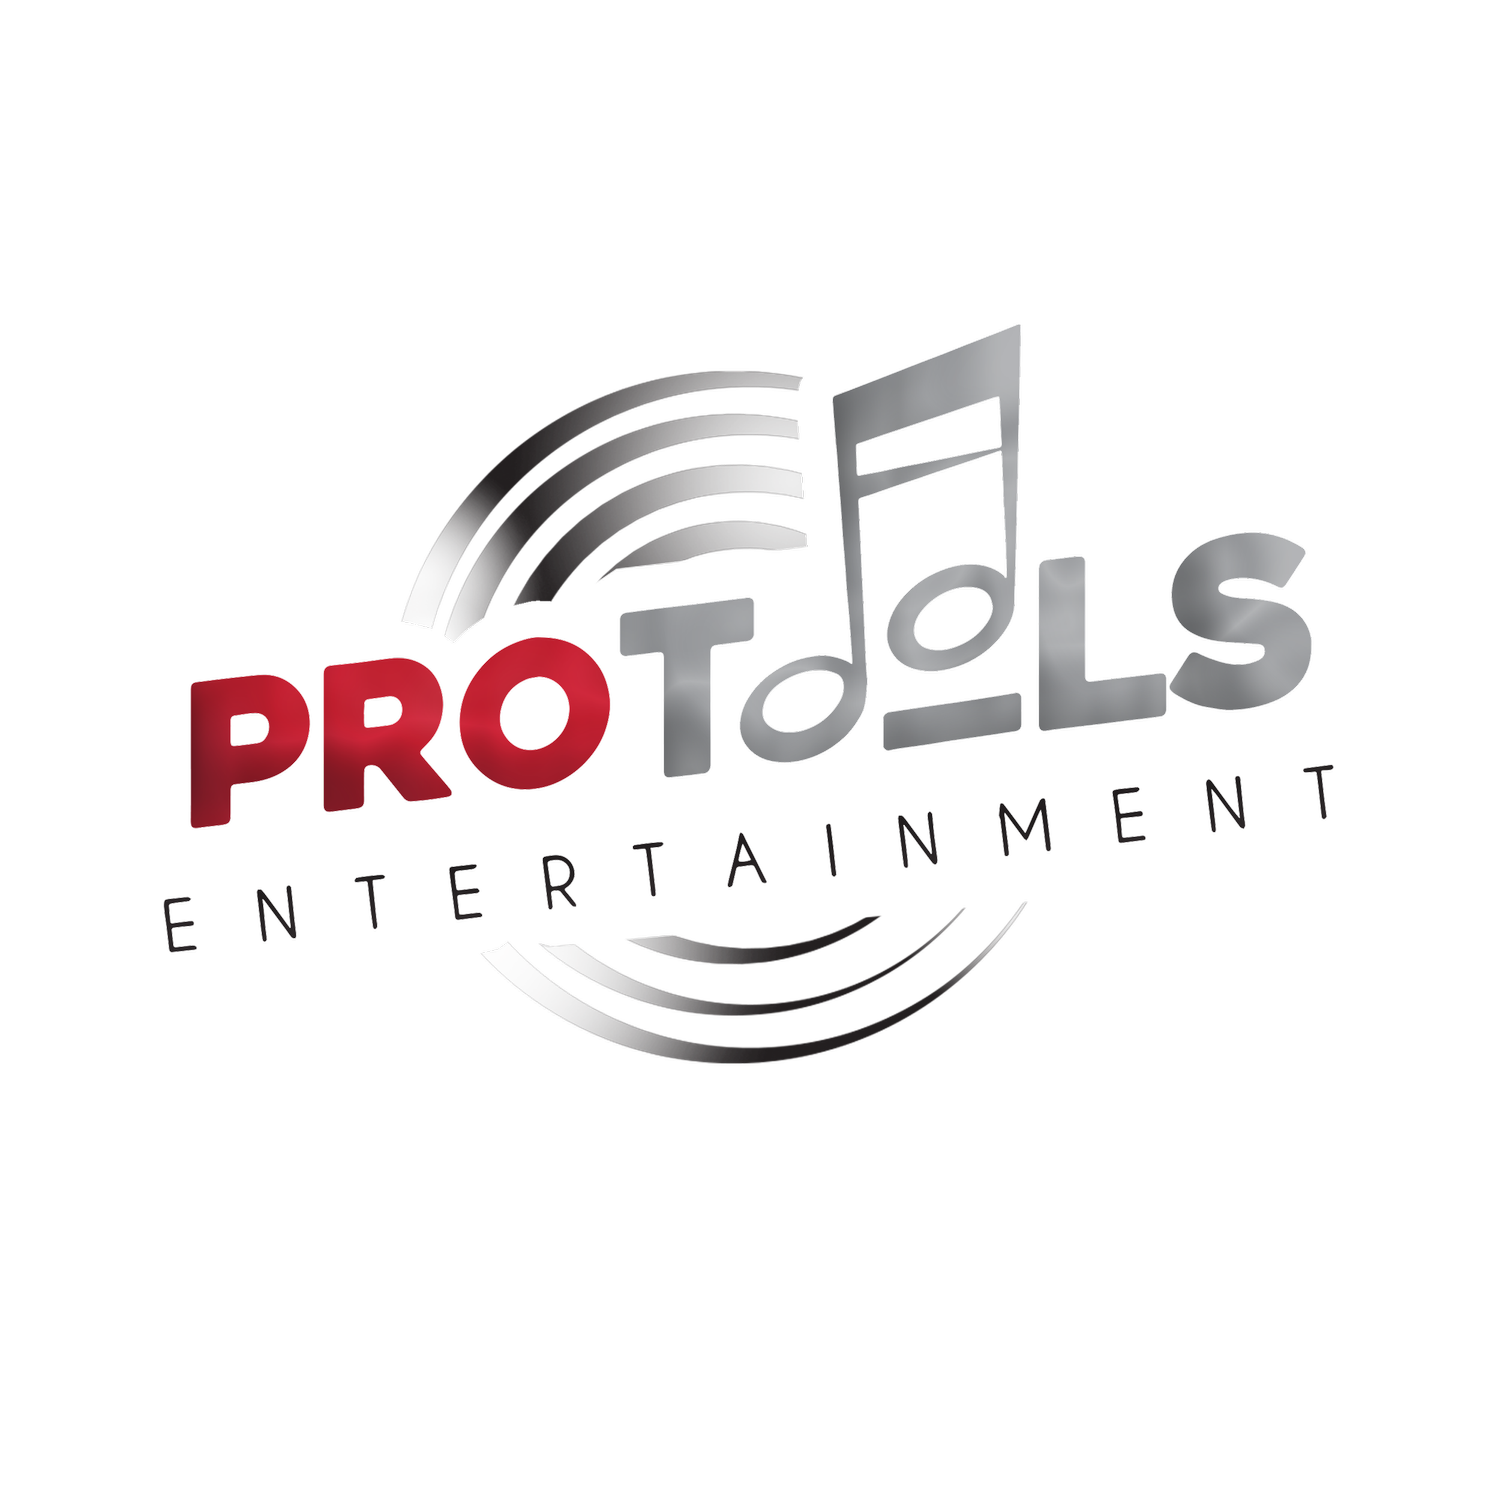 Protools Entertainment